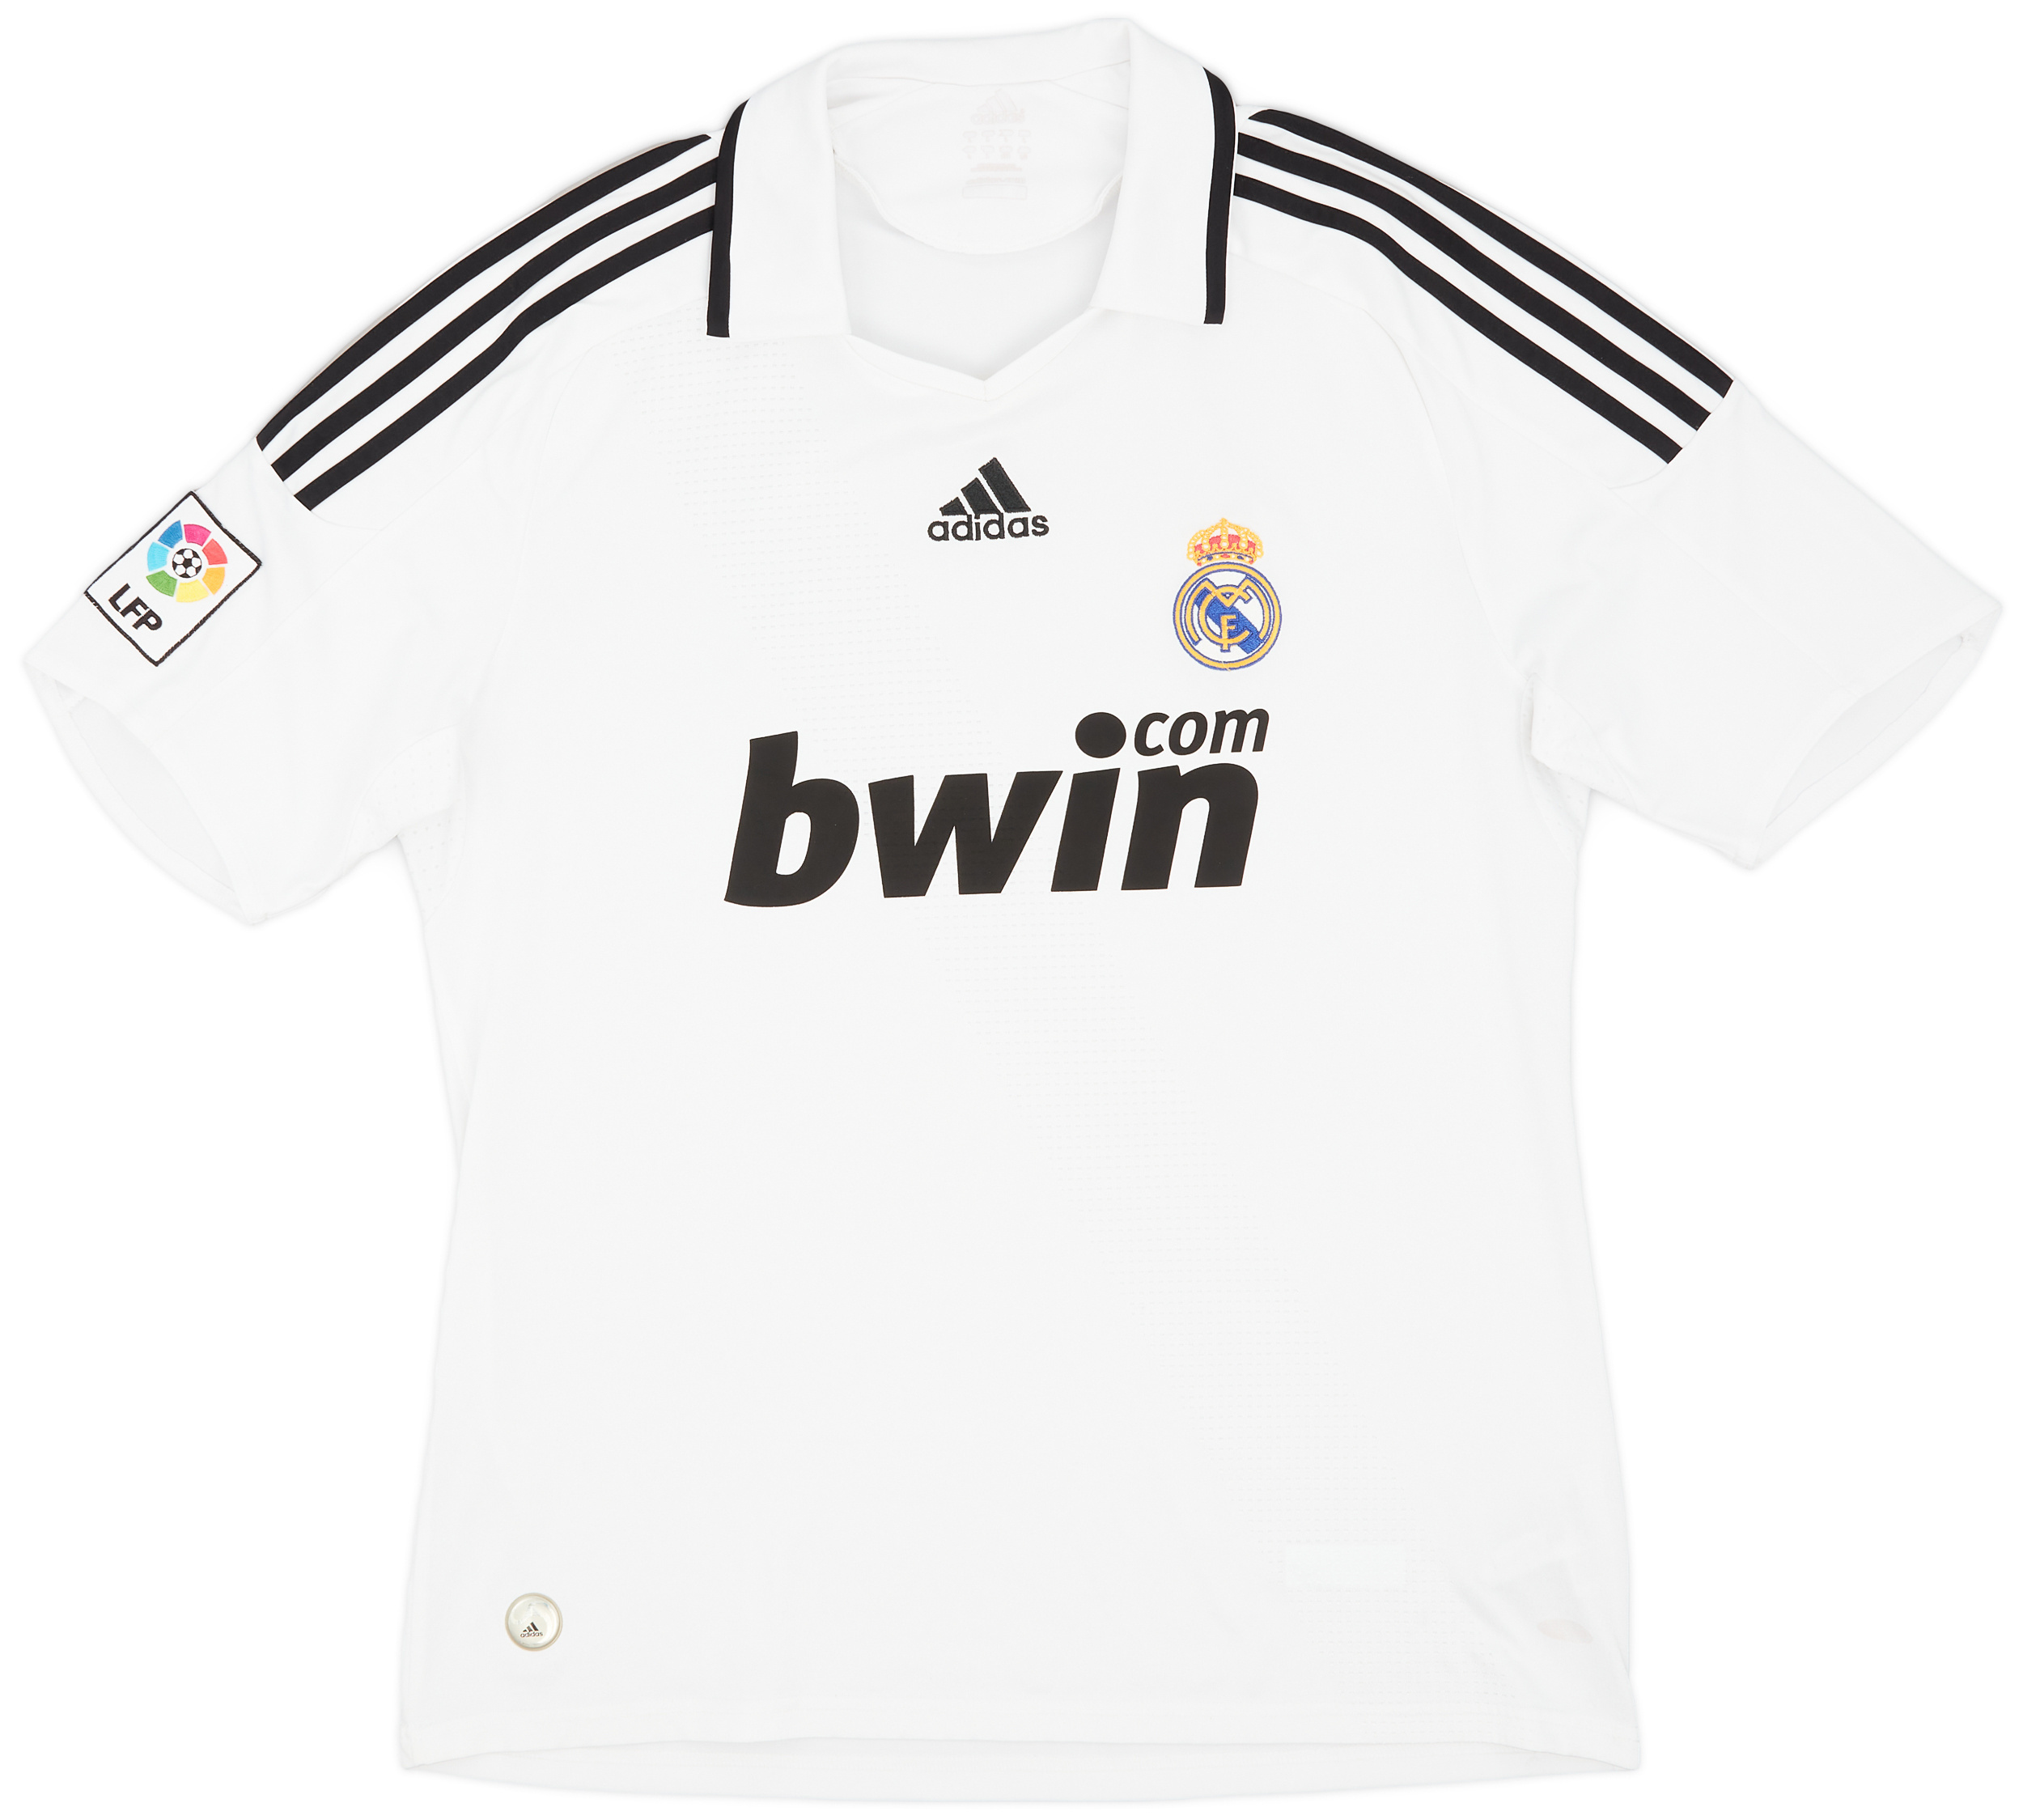 2008-09 Real Madrid Home Shirt - 9/10 - ()